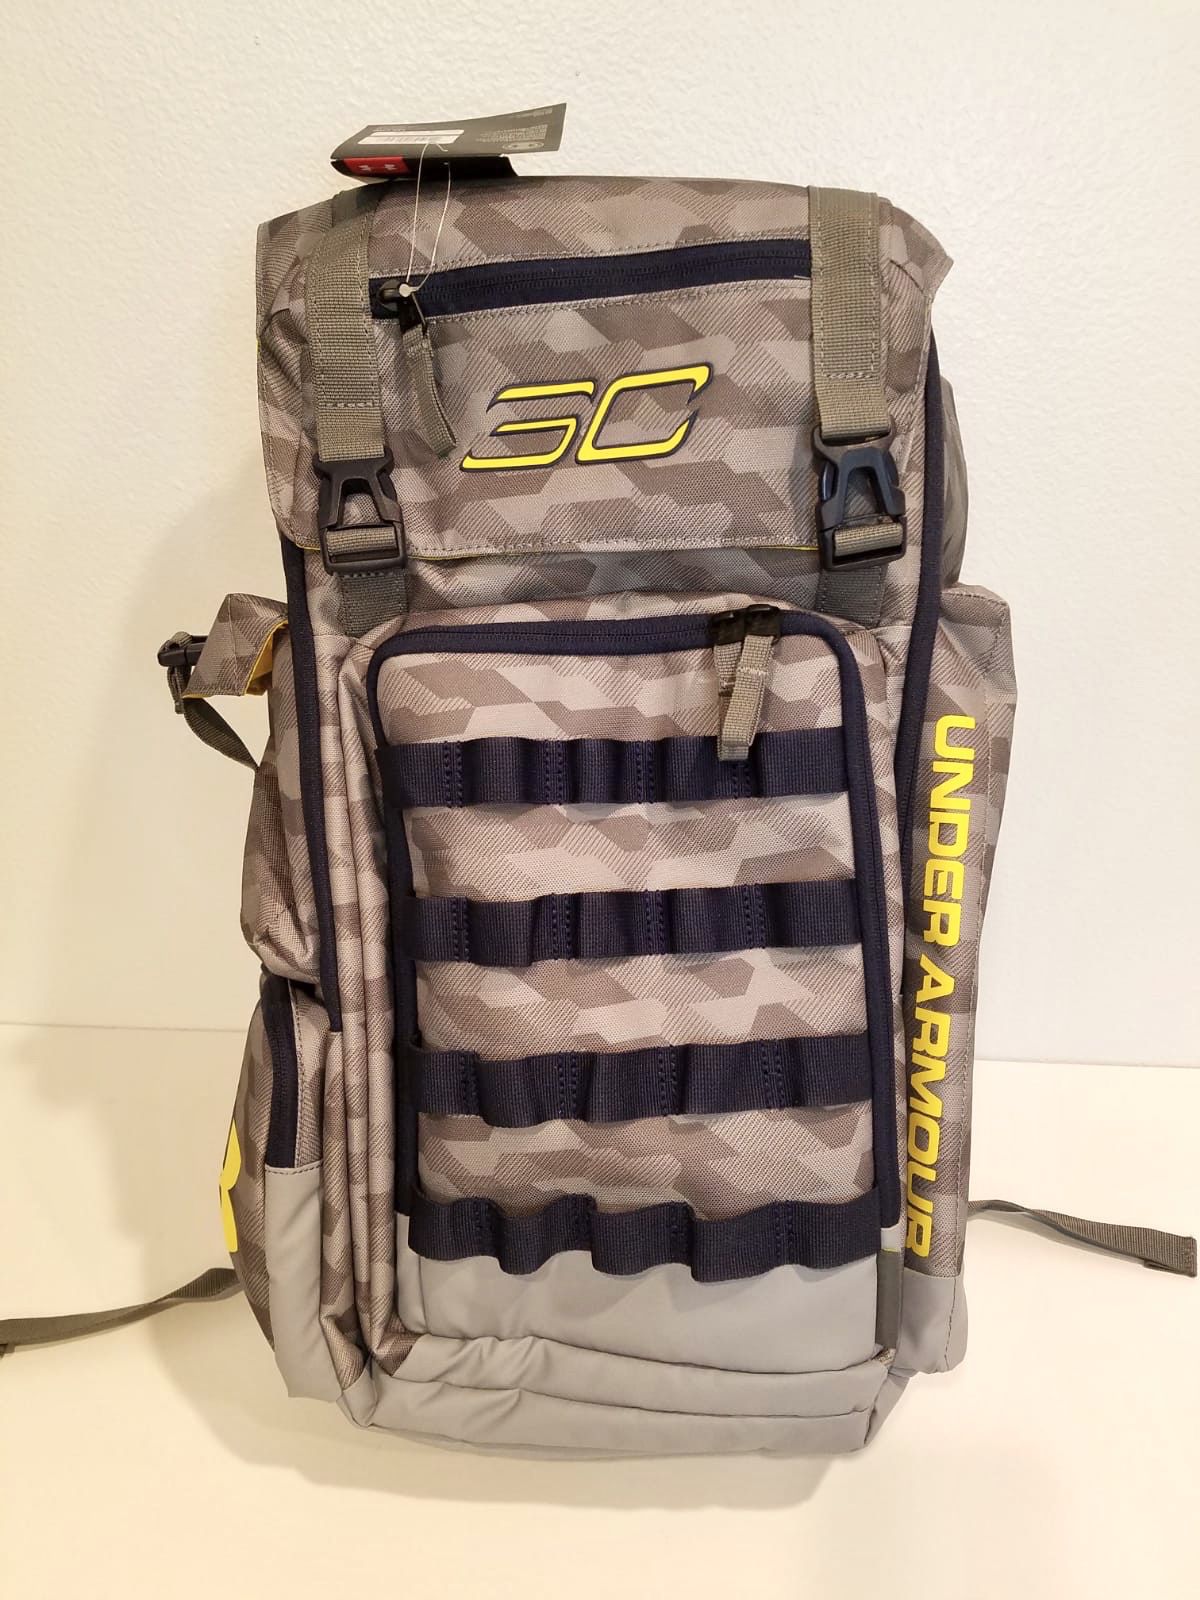 Apollo Grey Backpack – Aquarius Brand